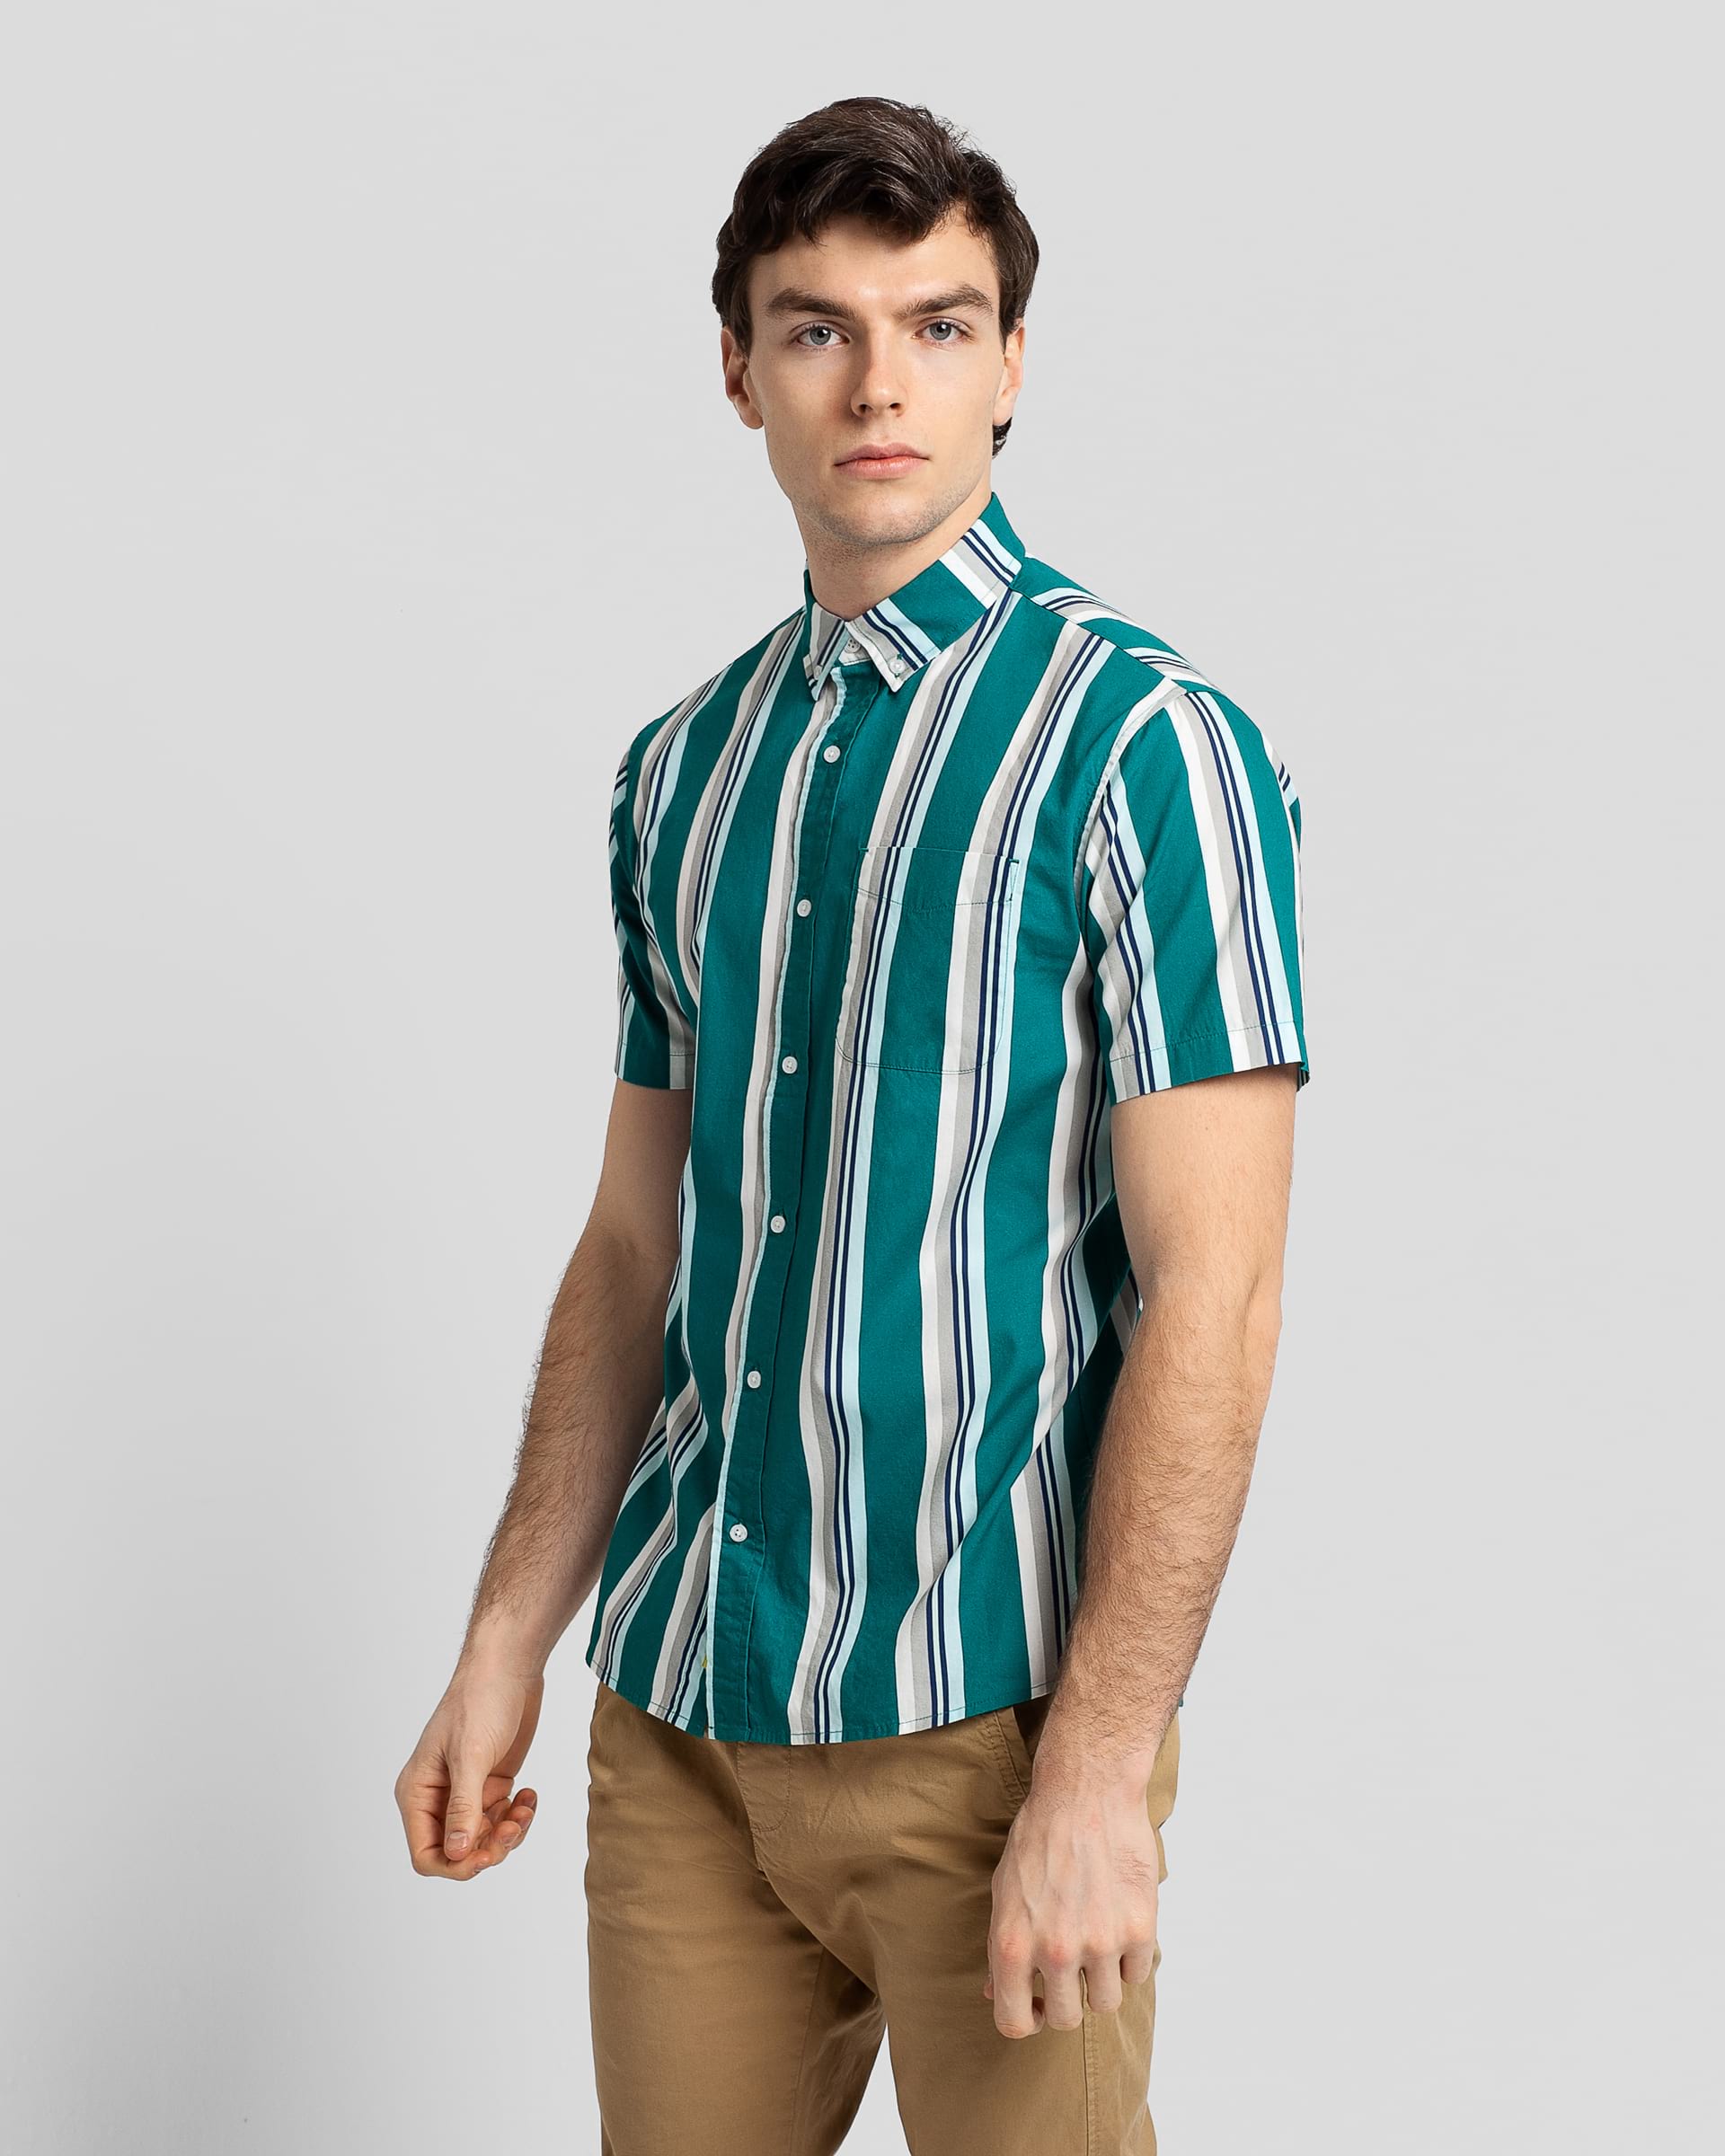 Retro Stripe Print Shirt > Casual Shirt > Button Up Shirt